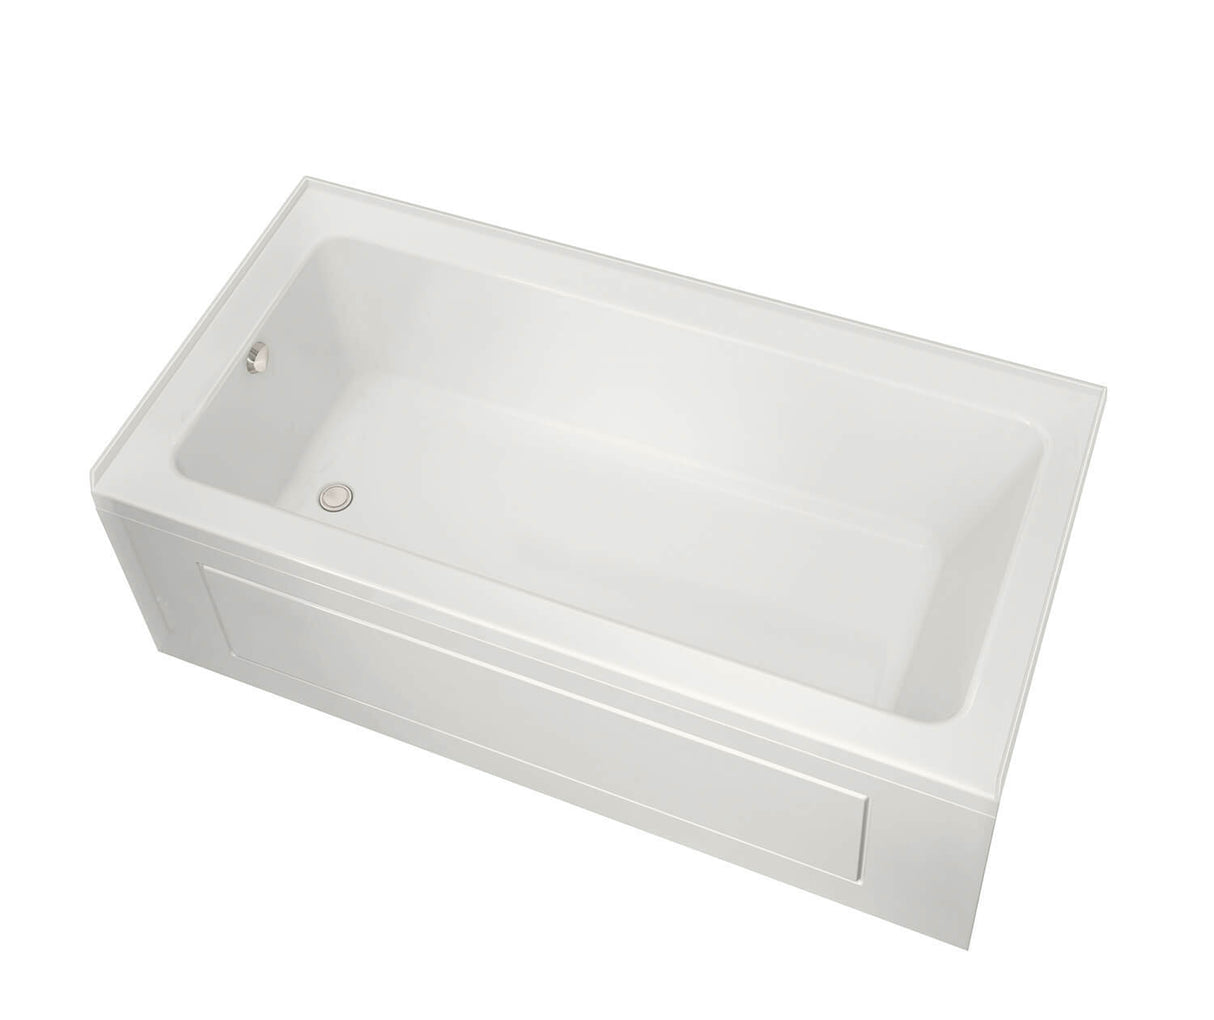 MAAX 106213-R-003-001 Pose 7242 IF Acrylic Alcove Right-Hand Drain Whirlpool Bathtub in White